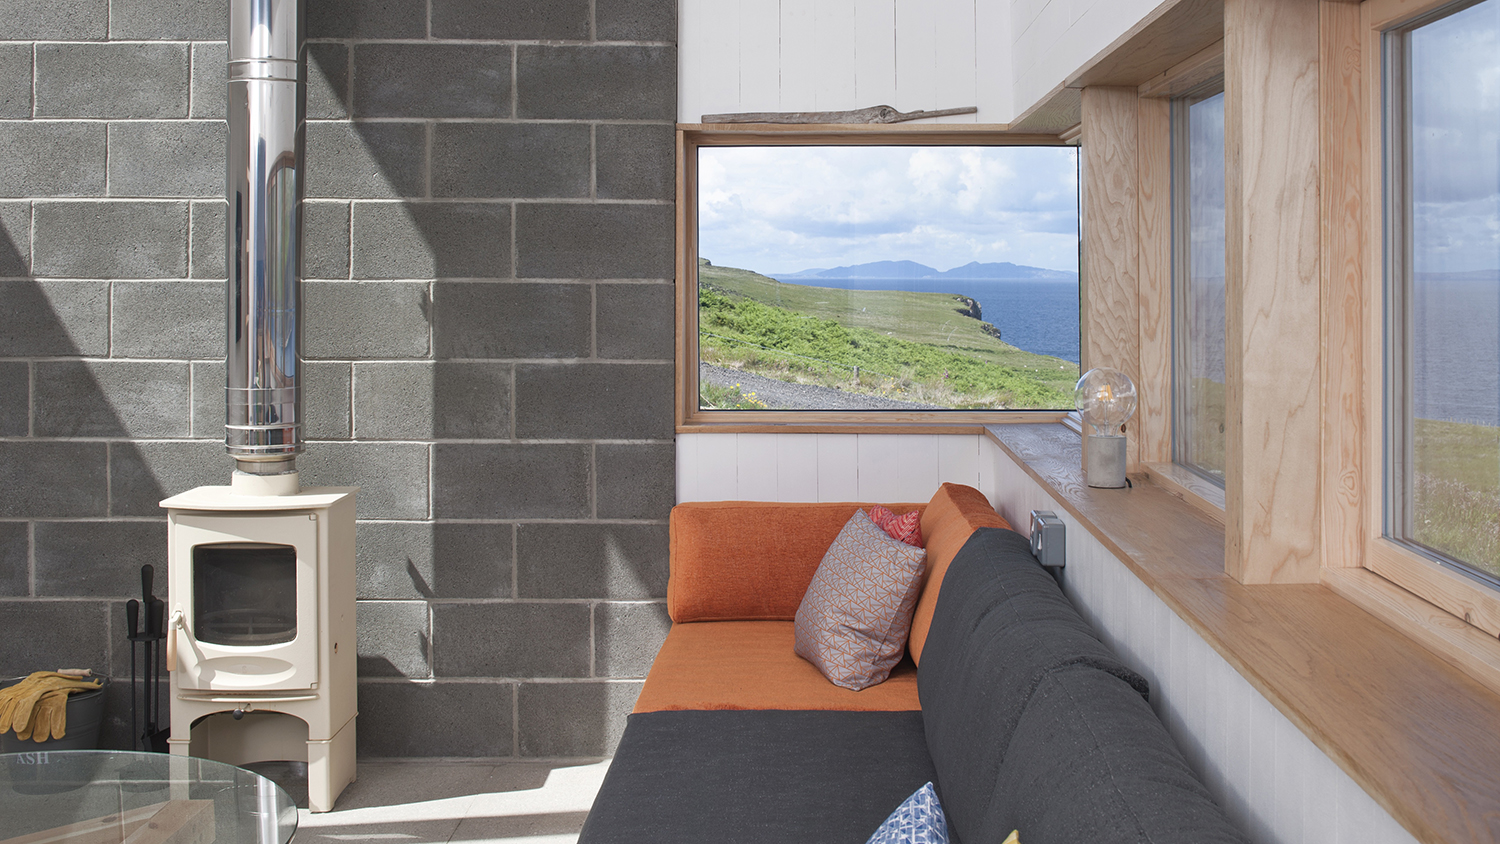 Tinhouse Scottish Countryside minimalist vacation home